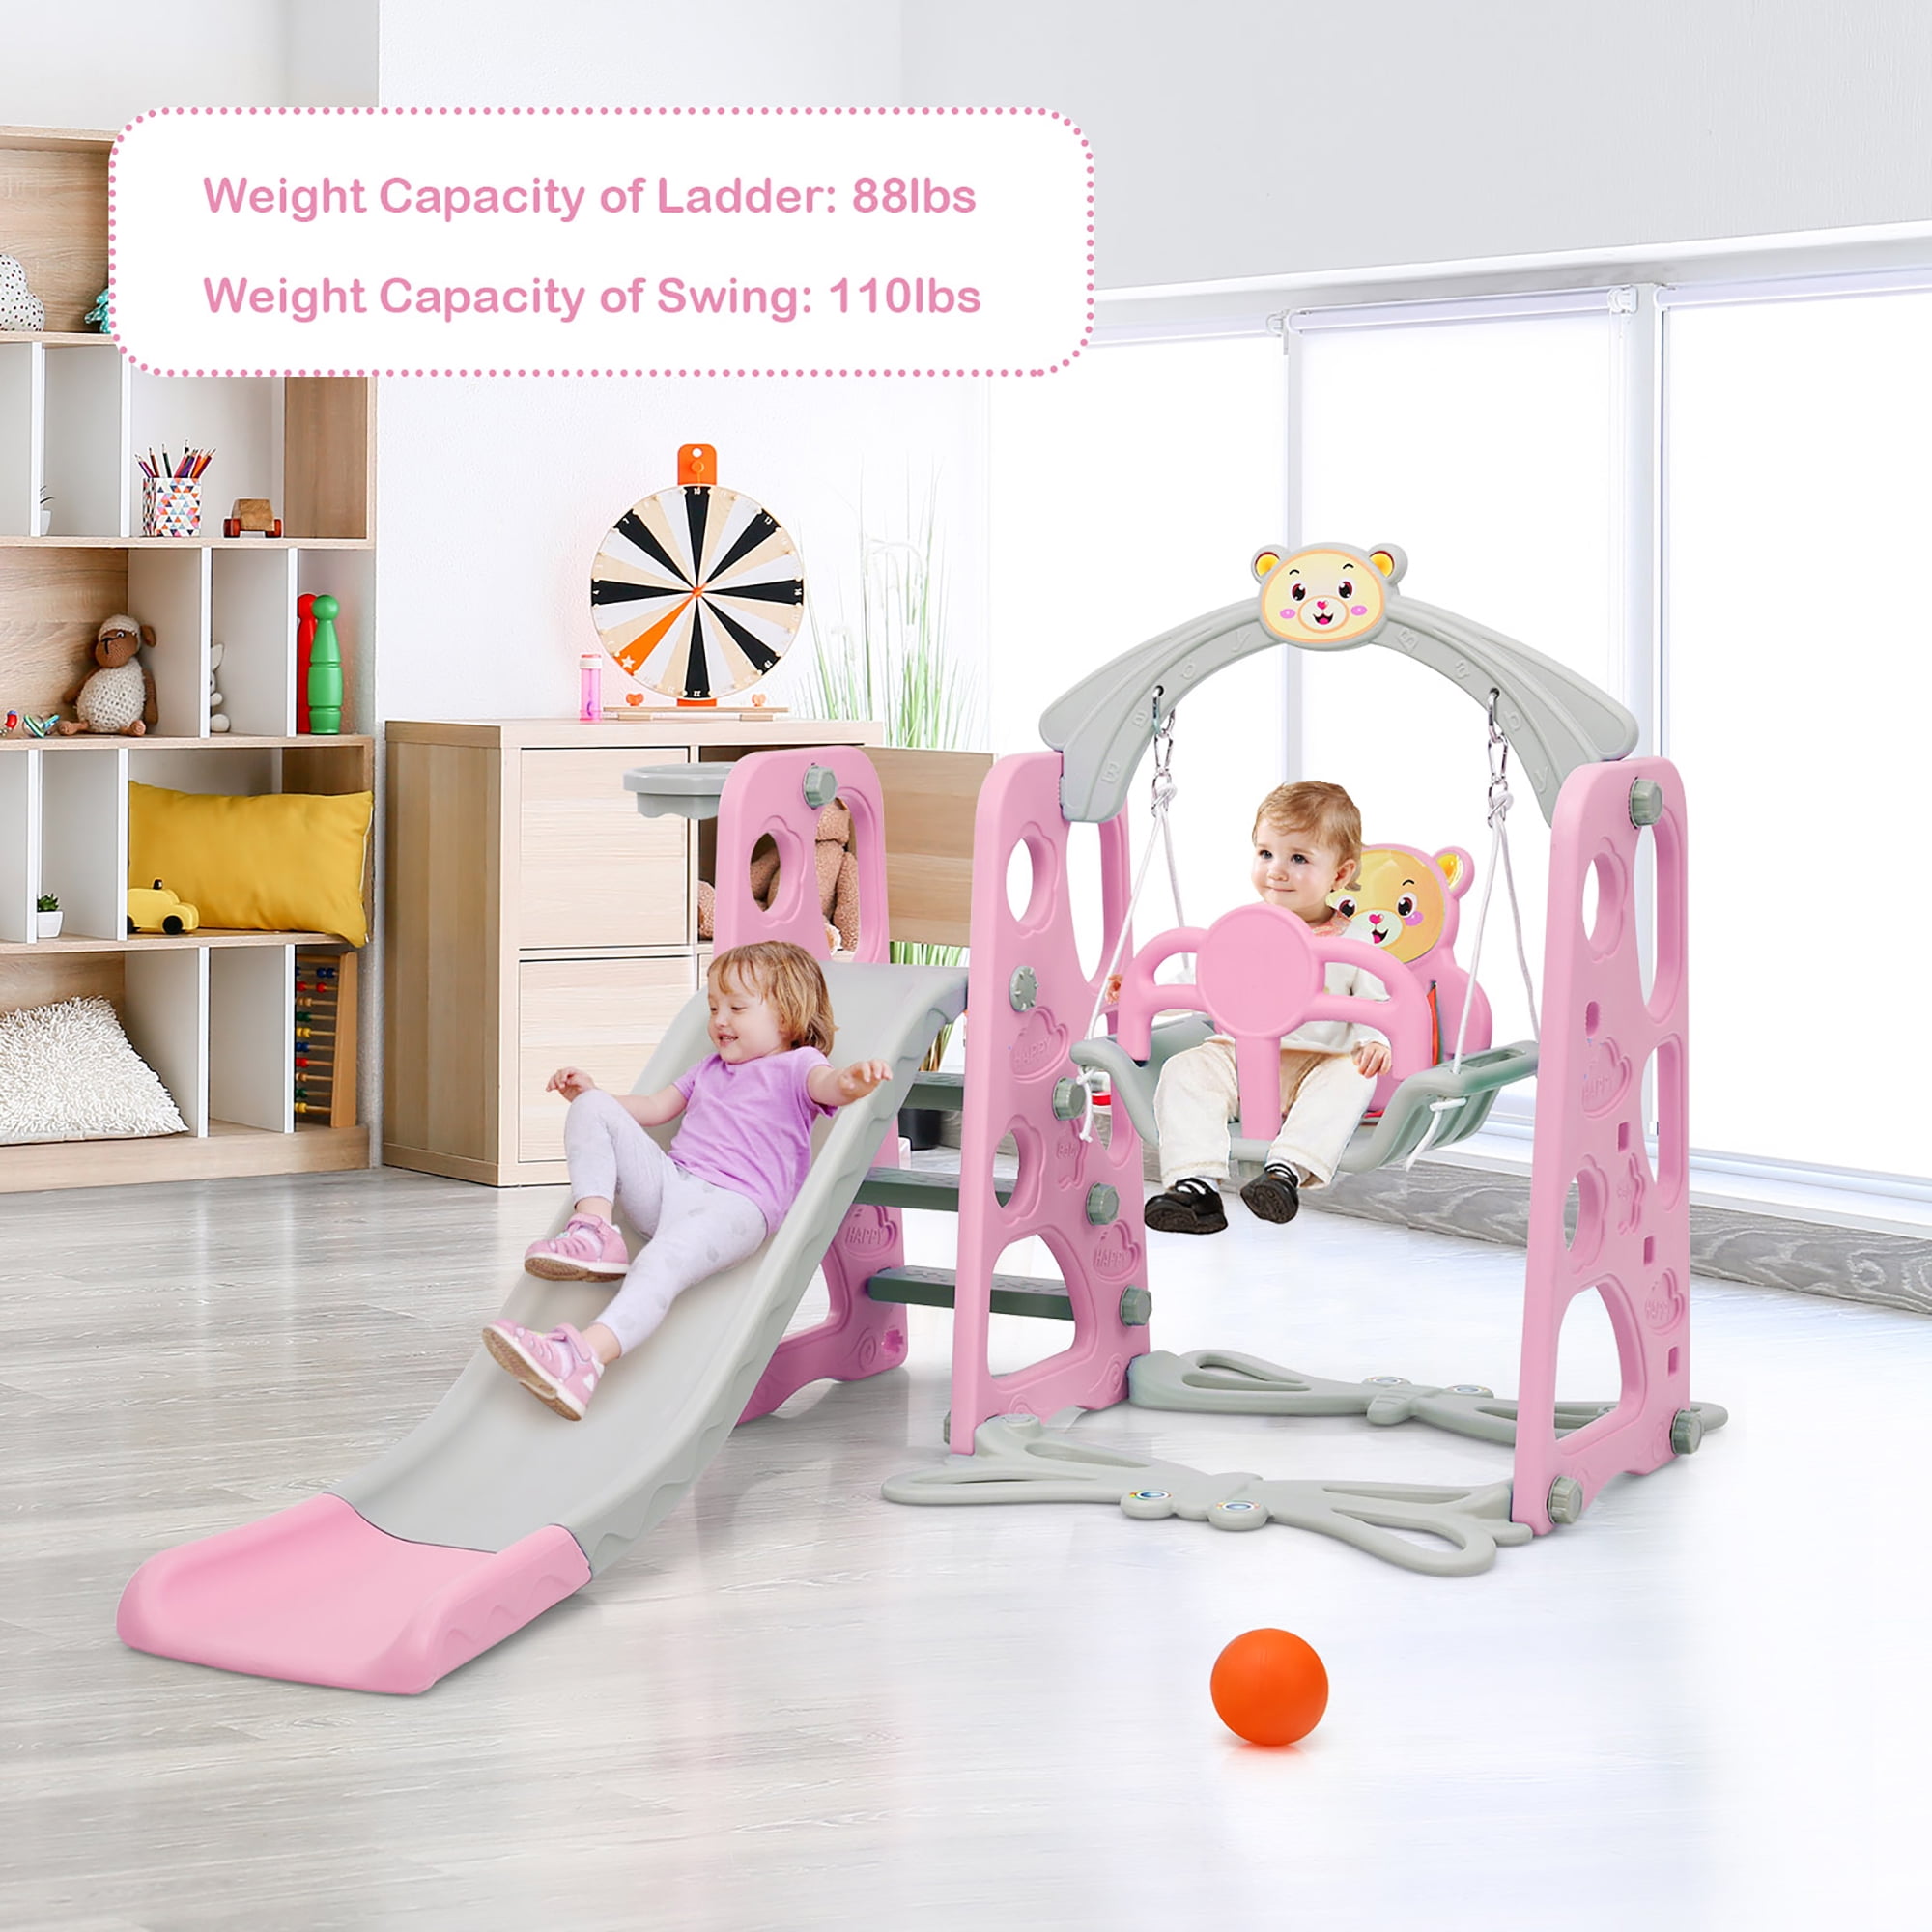 Toddler Climber&Swing Set 4 in 1 Climber Slide Playset Kids Indoor&Backyard 